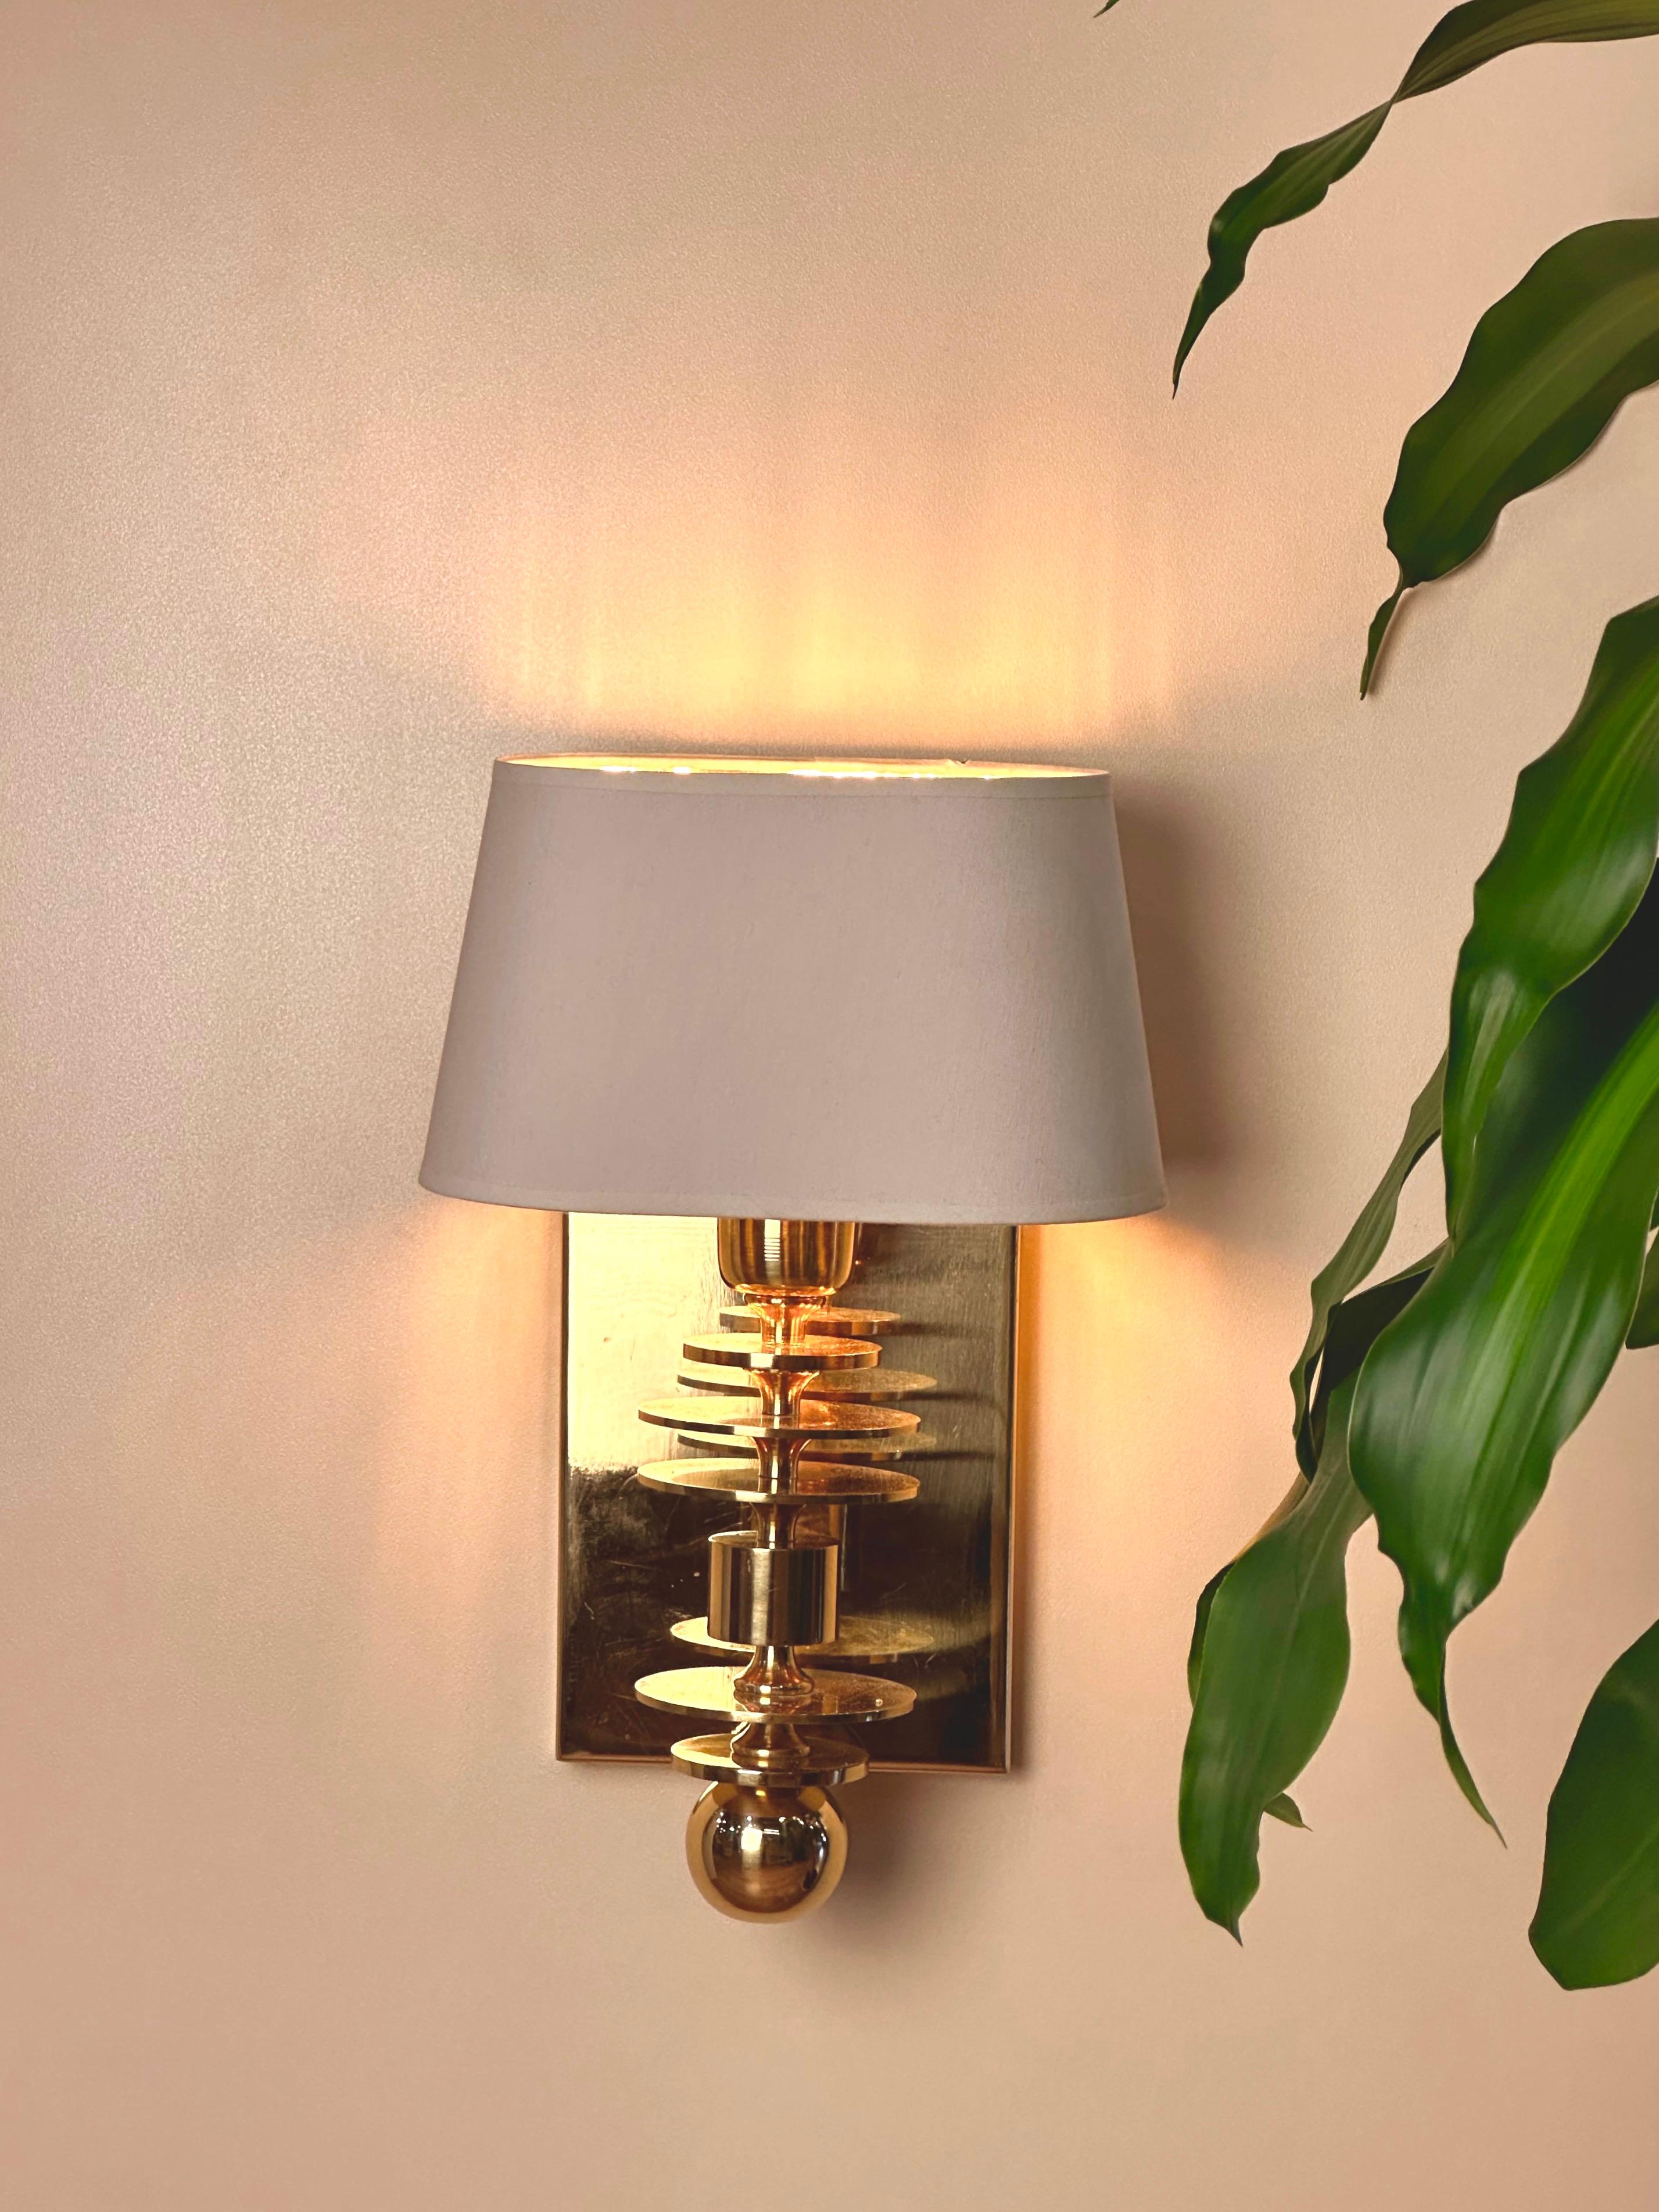 Welded Marsala Shade Brass Wall Sconce Mid-Century Modern Lighting For Sale